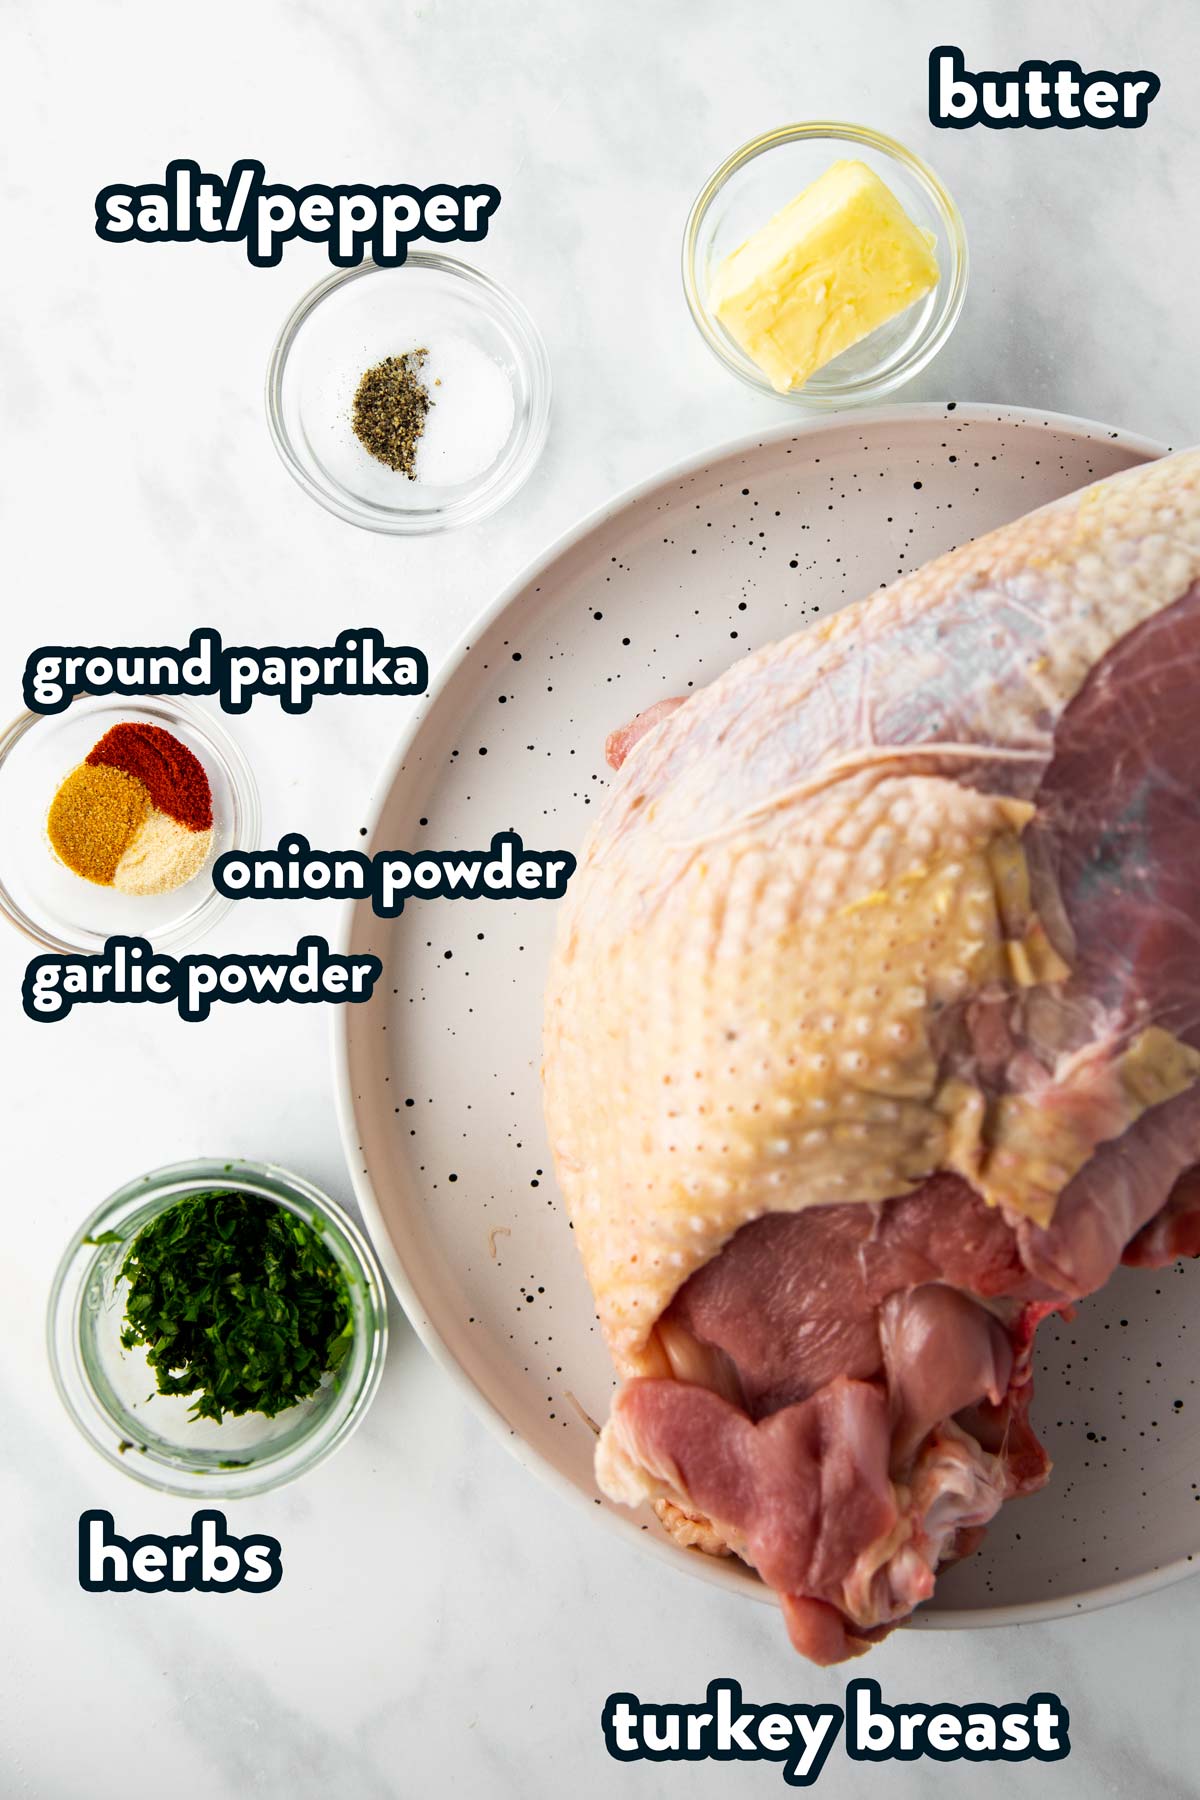 https://www.savorynothings.com/wp-content/uploads/2021/11/air-fryer-turkey-breast-recipe-image-ingredients.jpg